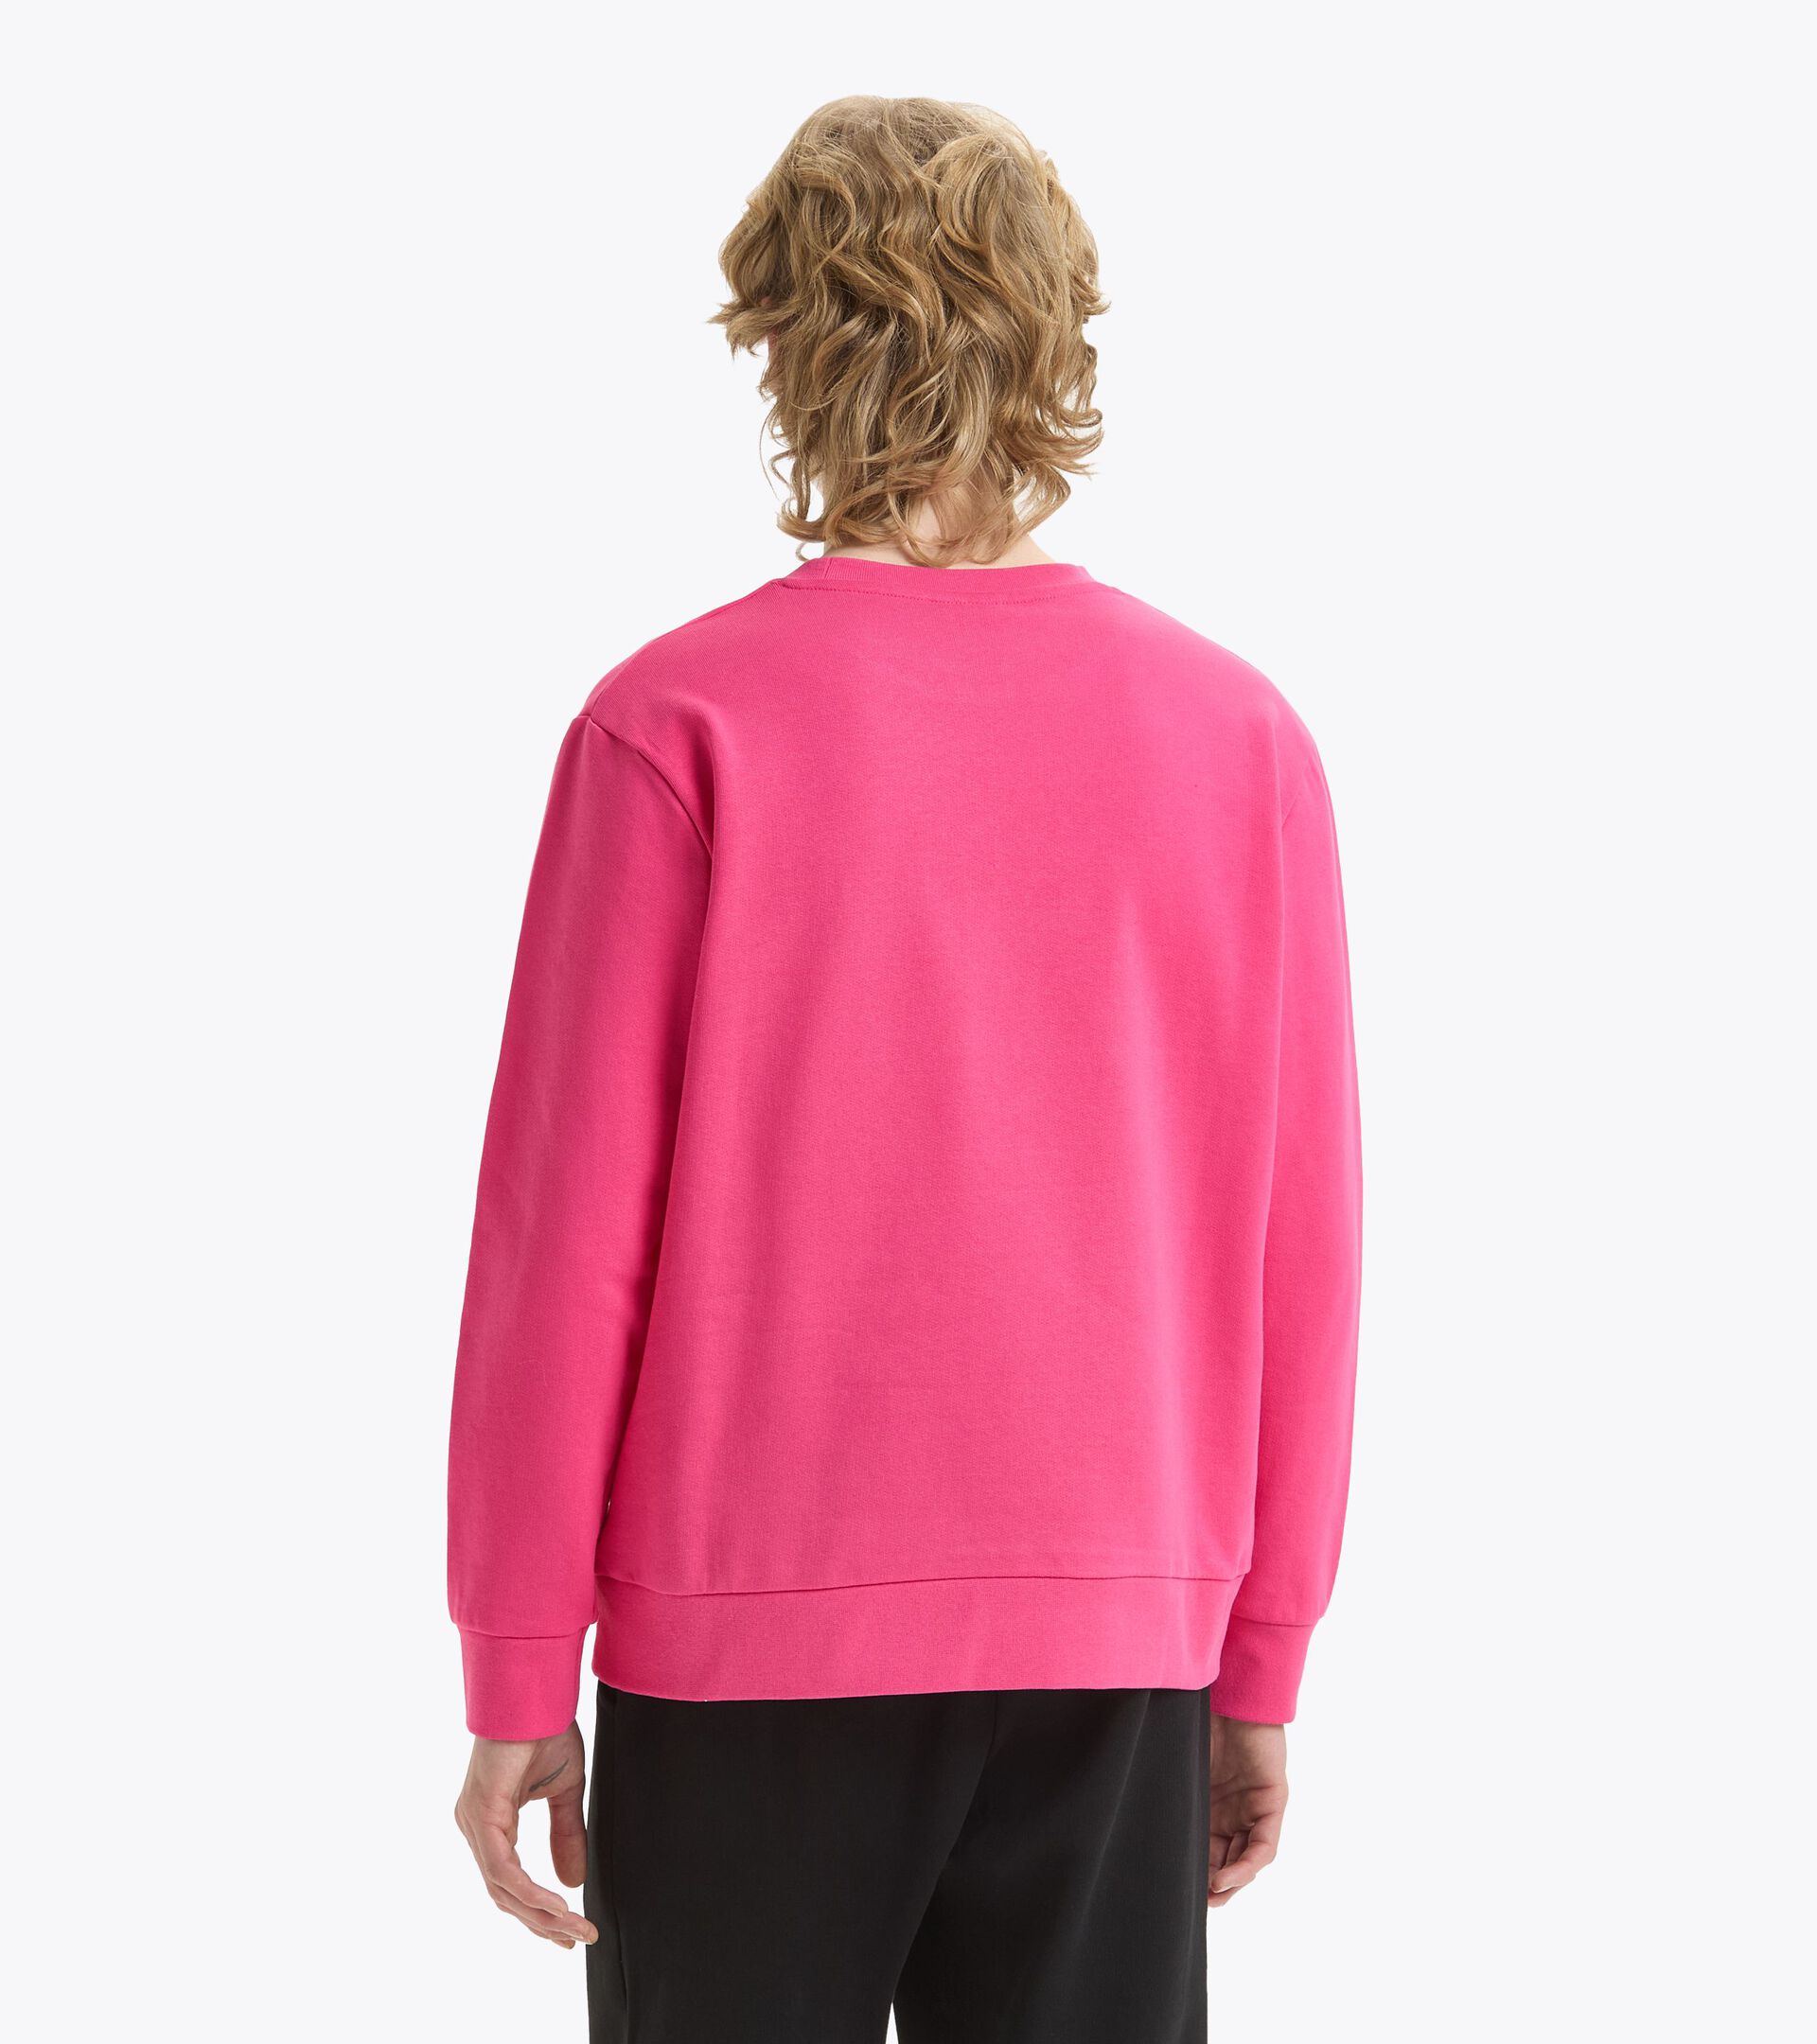 Sweatshirt - Made in Italy - Gender Neutral SWEATSHIRT CREW LOGO PINK SORBET - Diadora